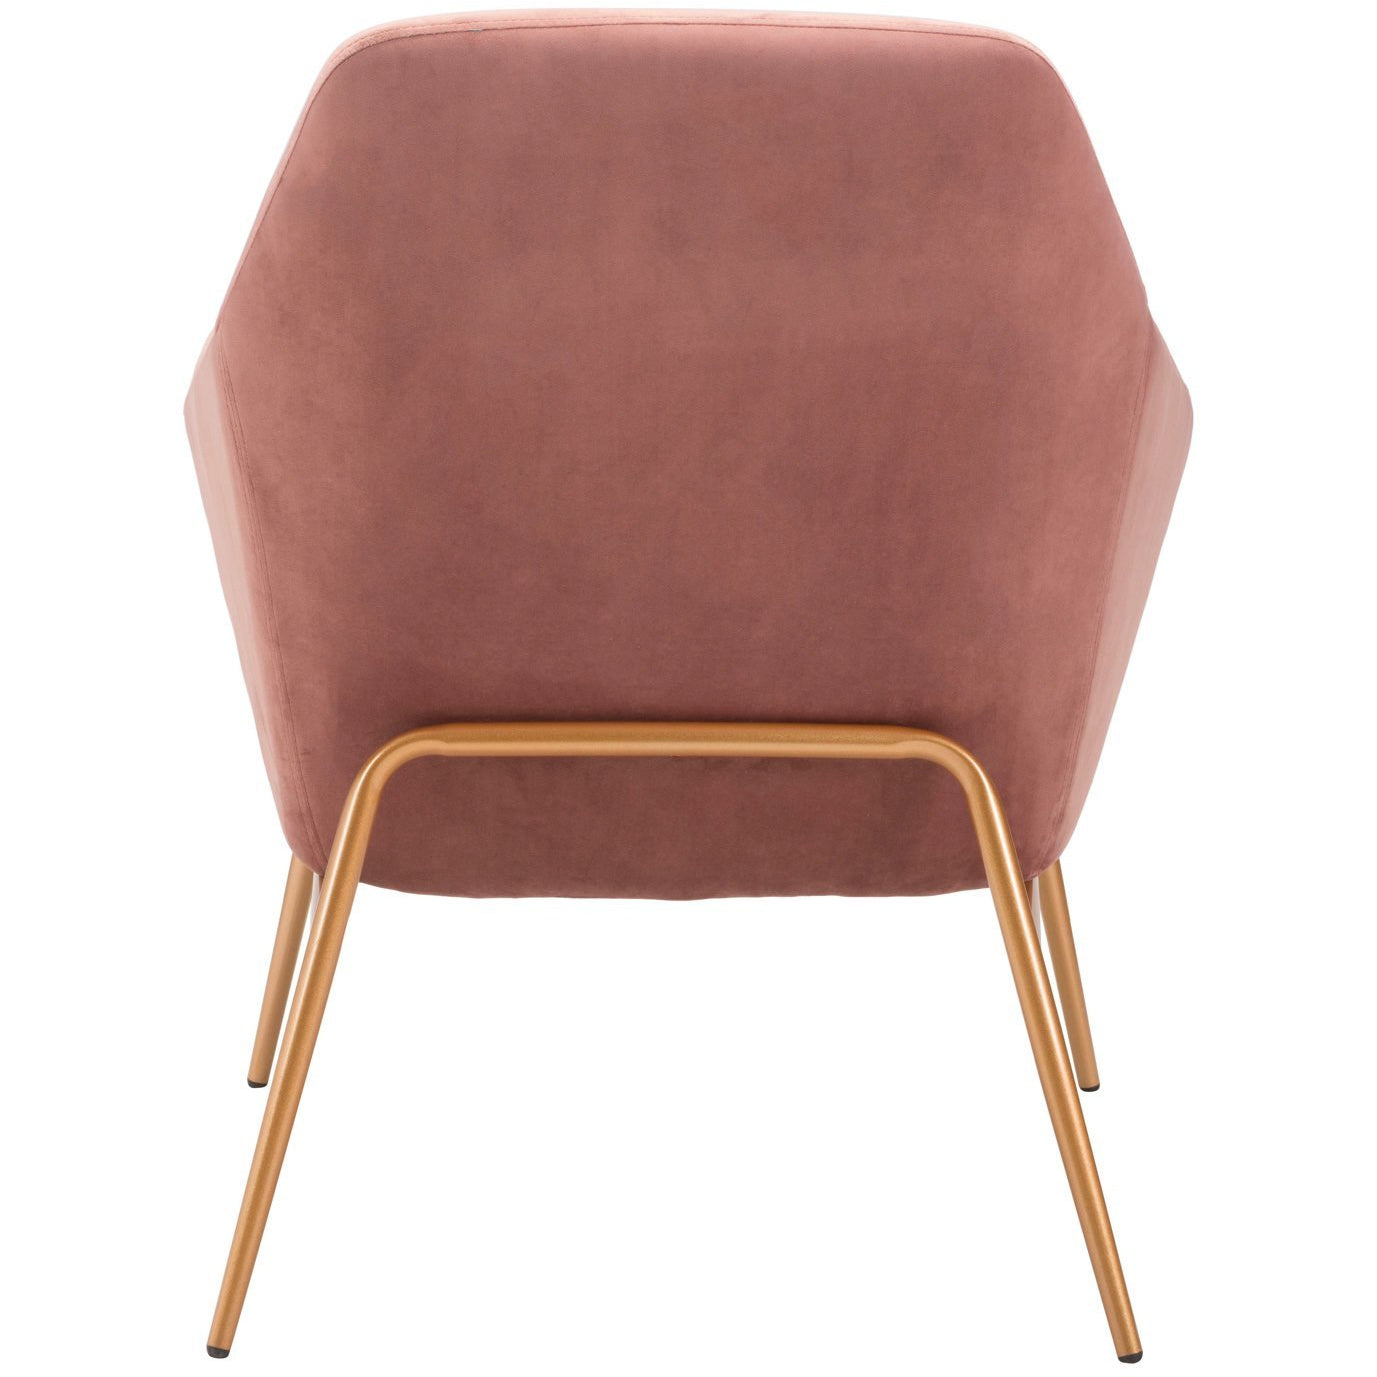 Sofia Pink Velvet & Gold Arm Chair